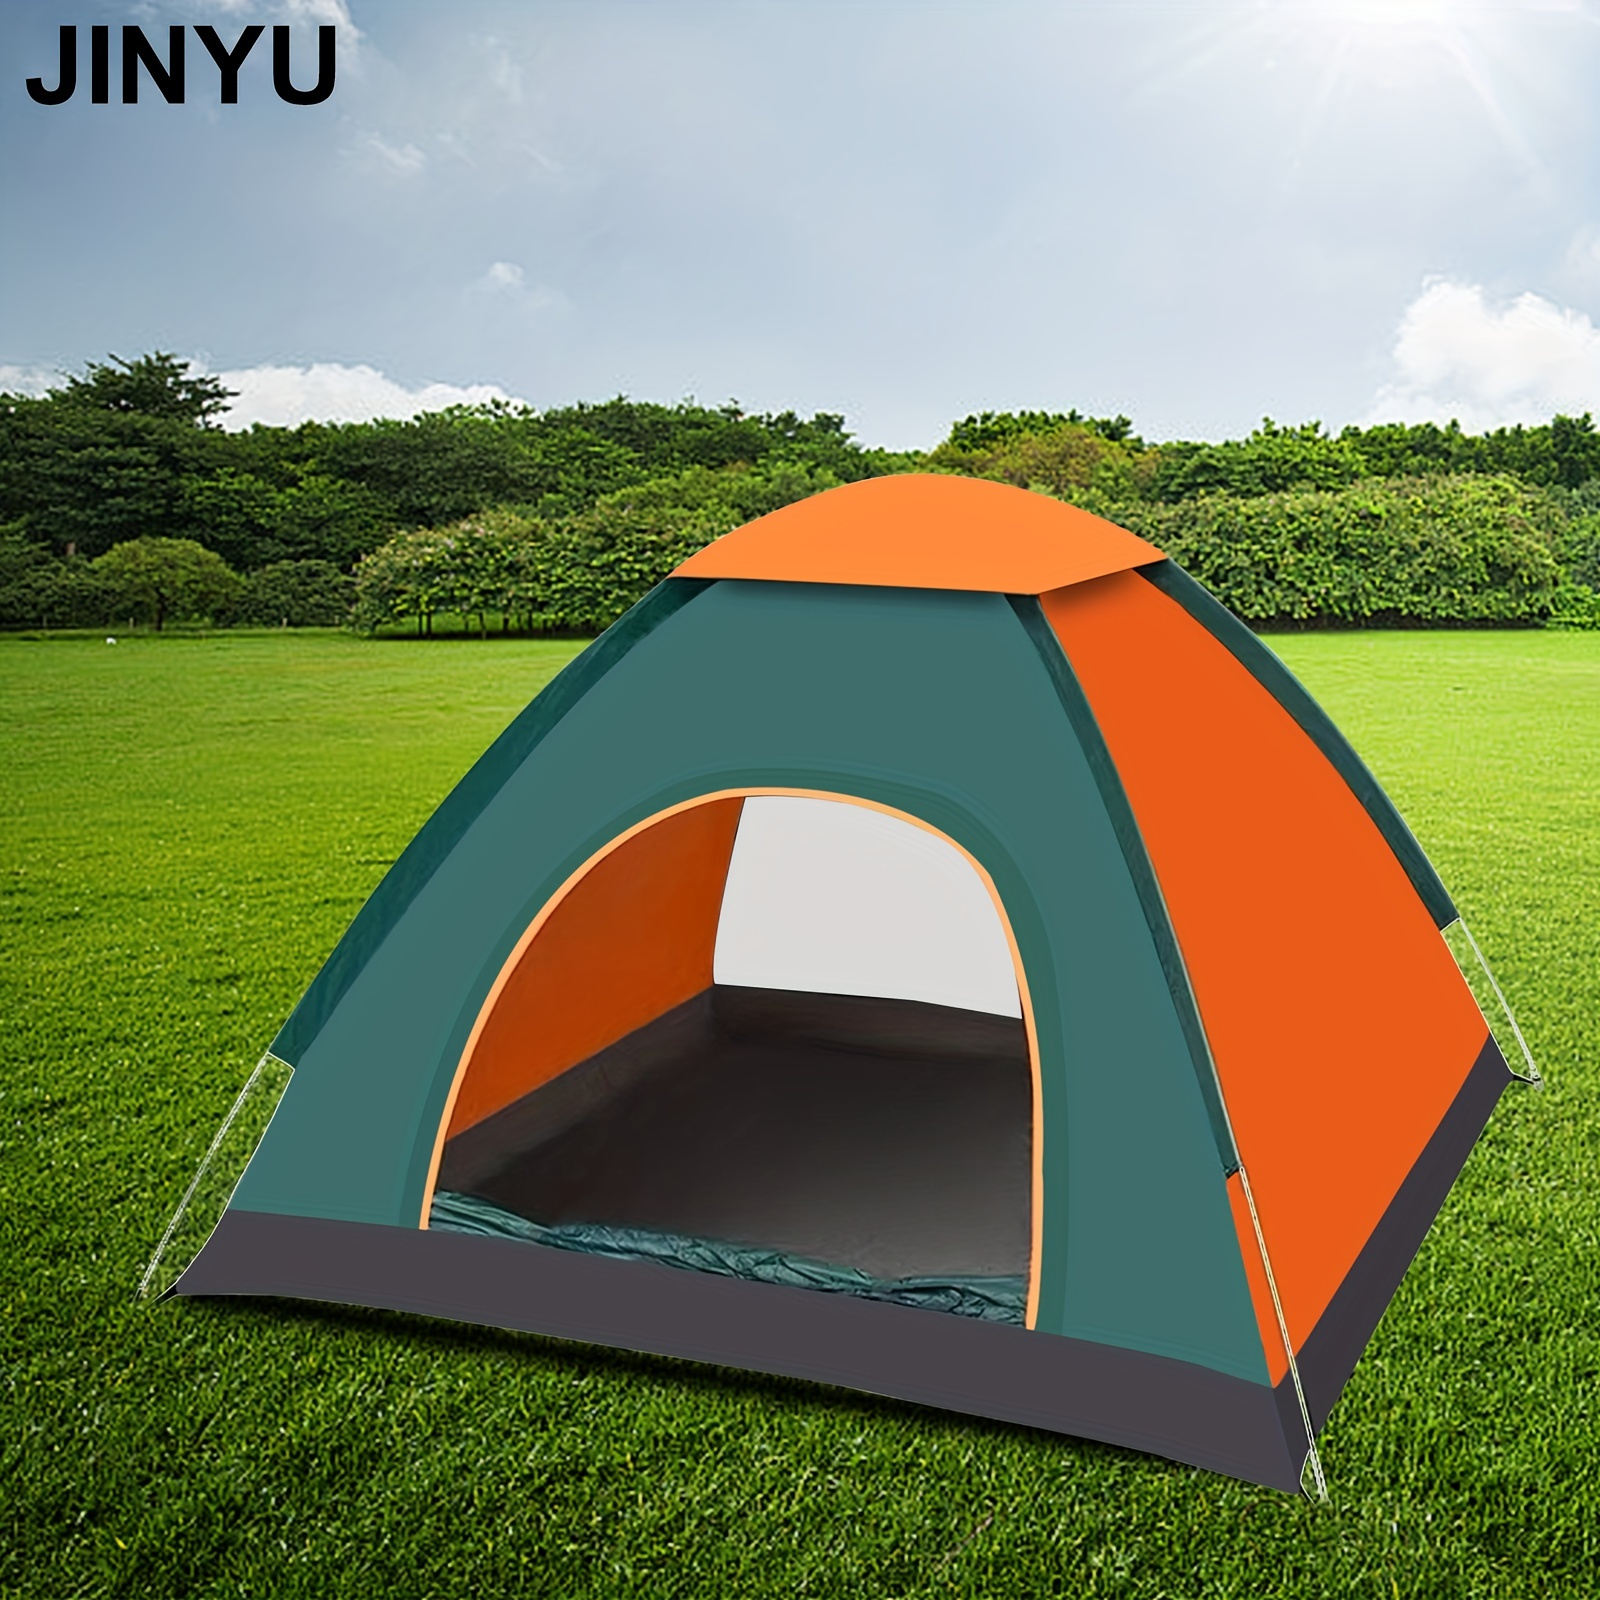 JINYU  インスタントポップアップテント、ファミリーキャンプテント、2人用ポータブルテント、自動防水防風テント、キャンプ、ハイキング、登山、キャンプアクセサリー用